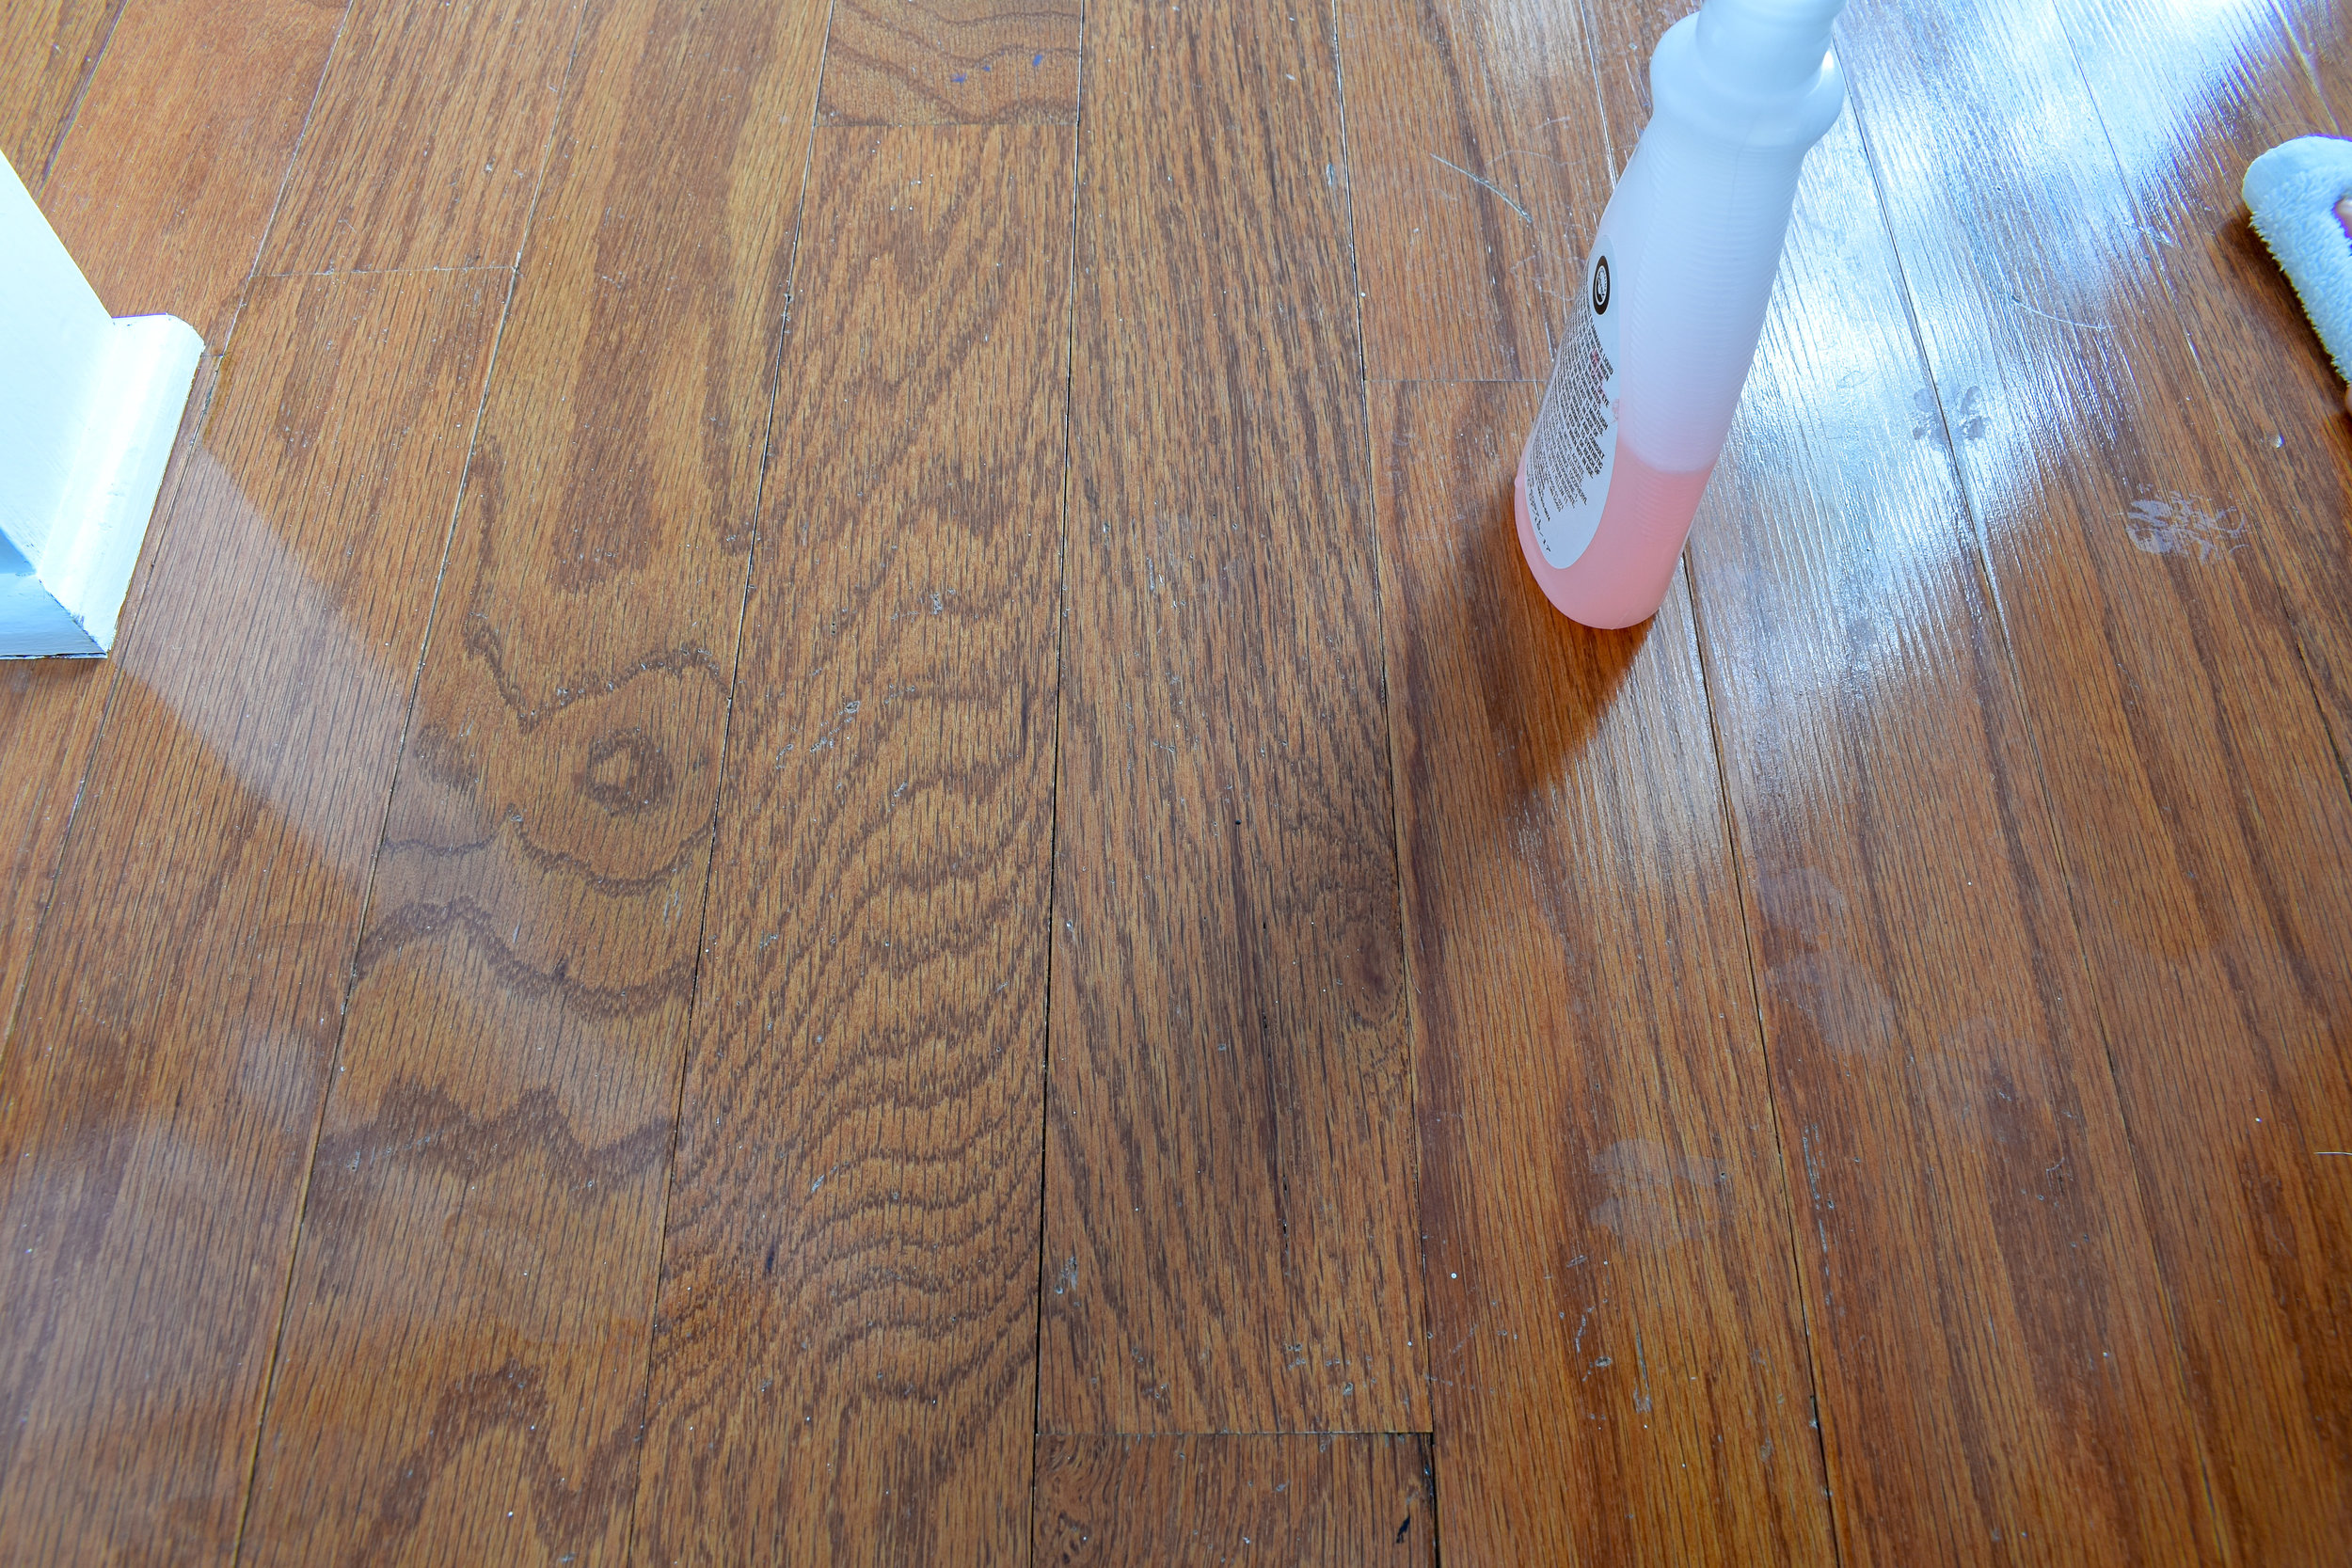 How To Make Old Hardwood Floors Shine, Make Hardwood Floors Shine